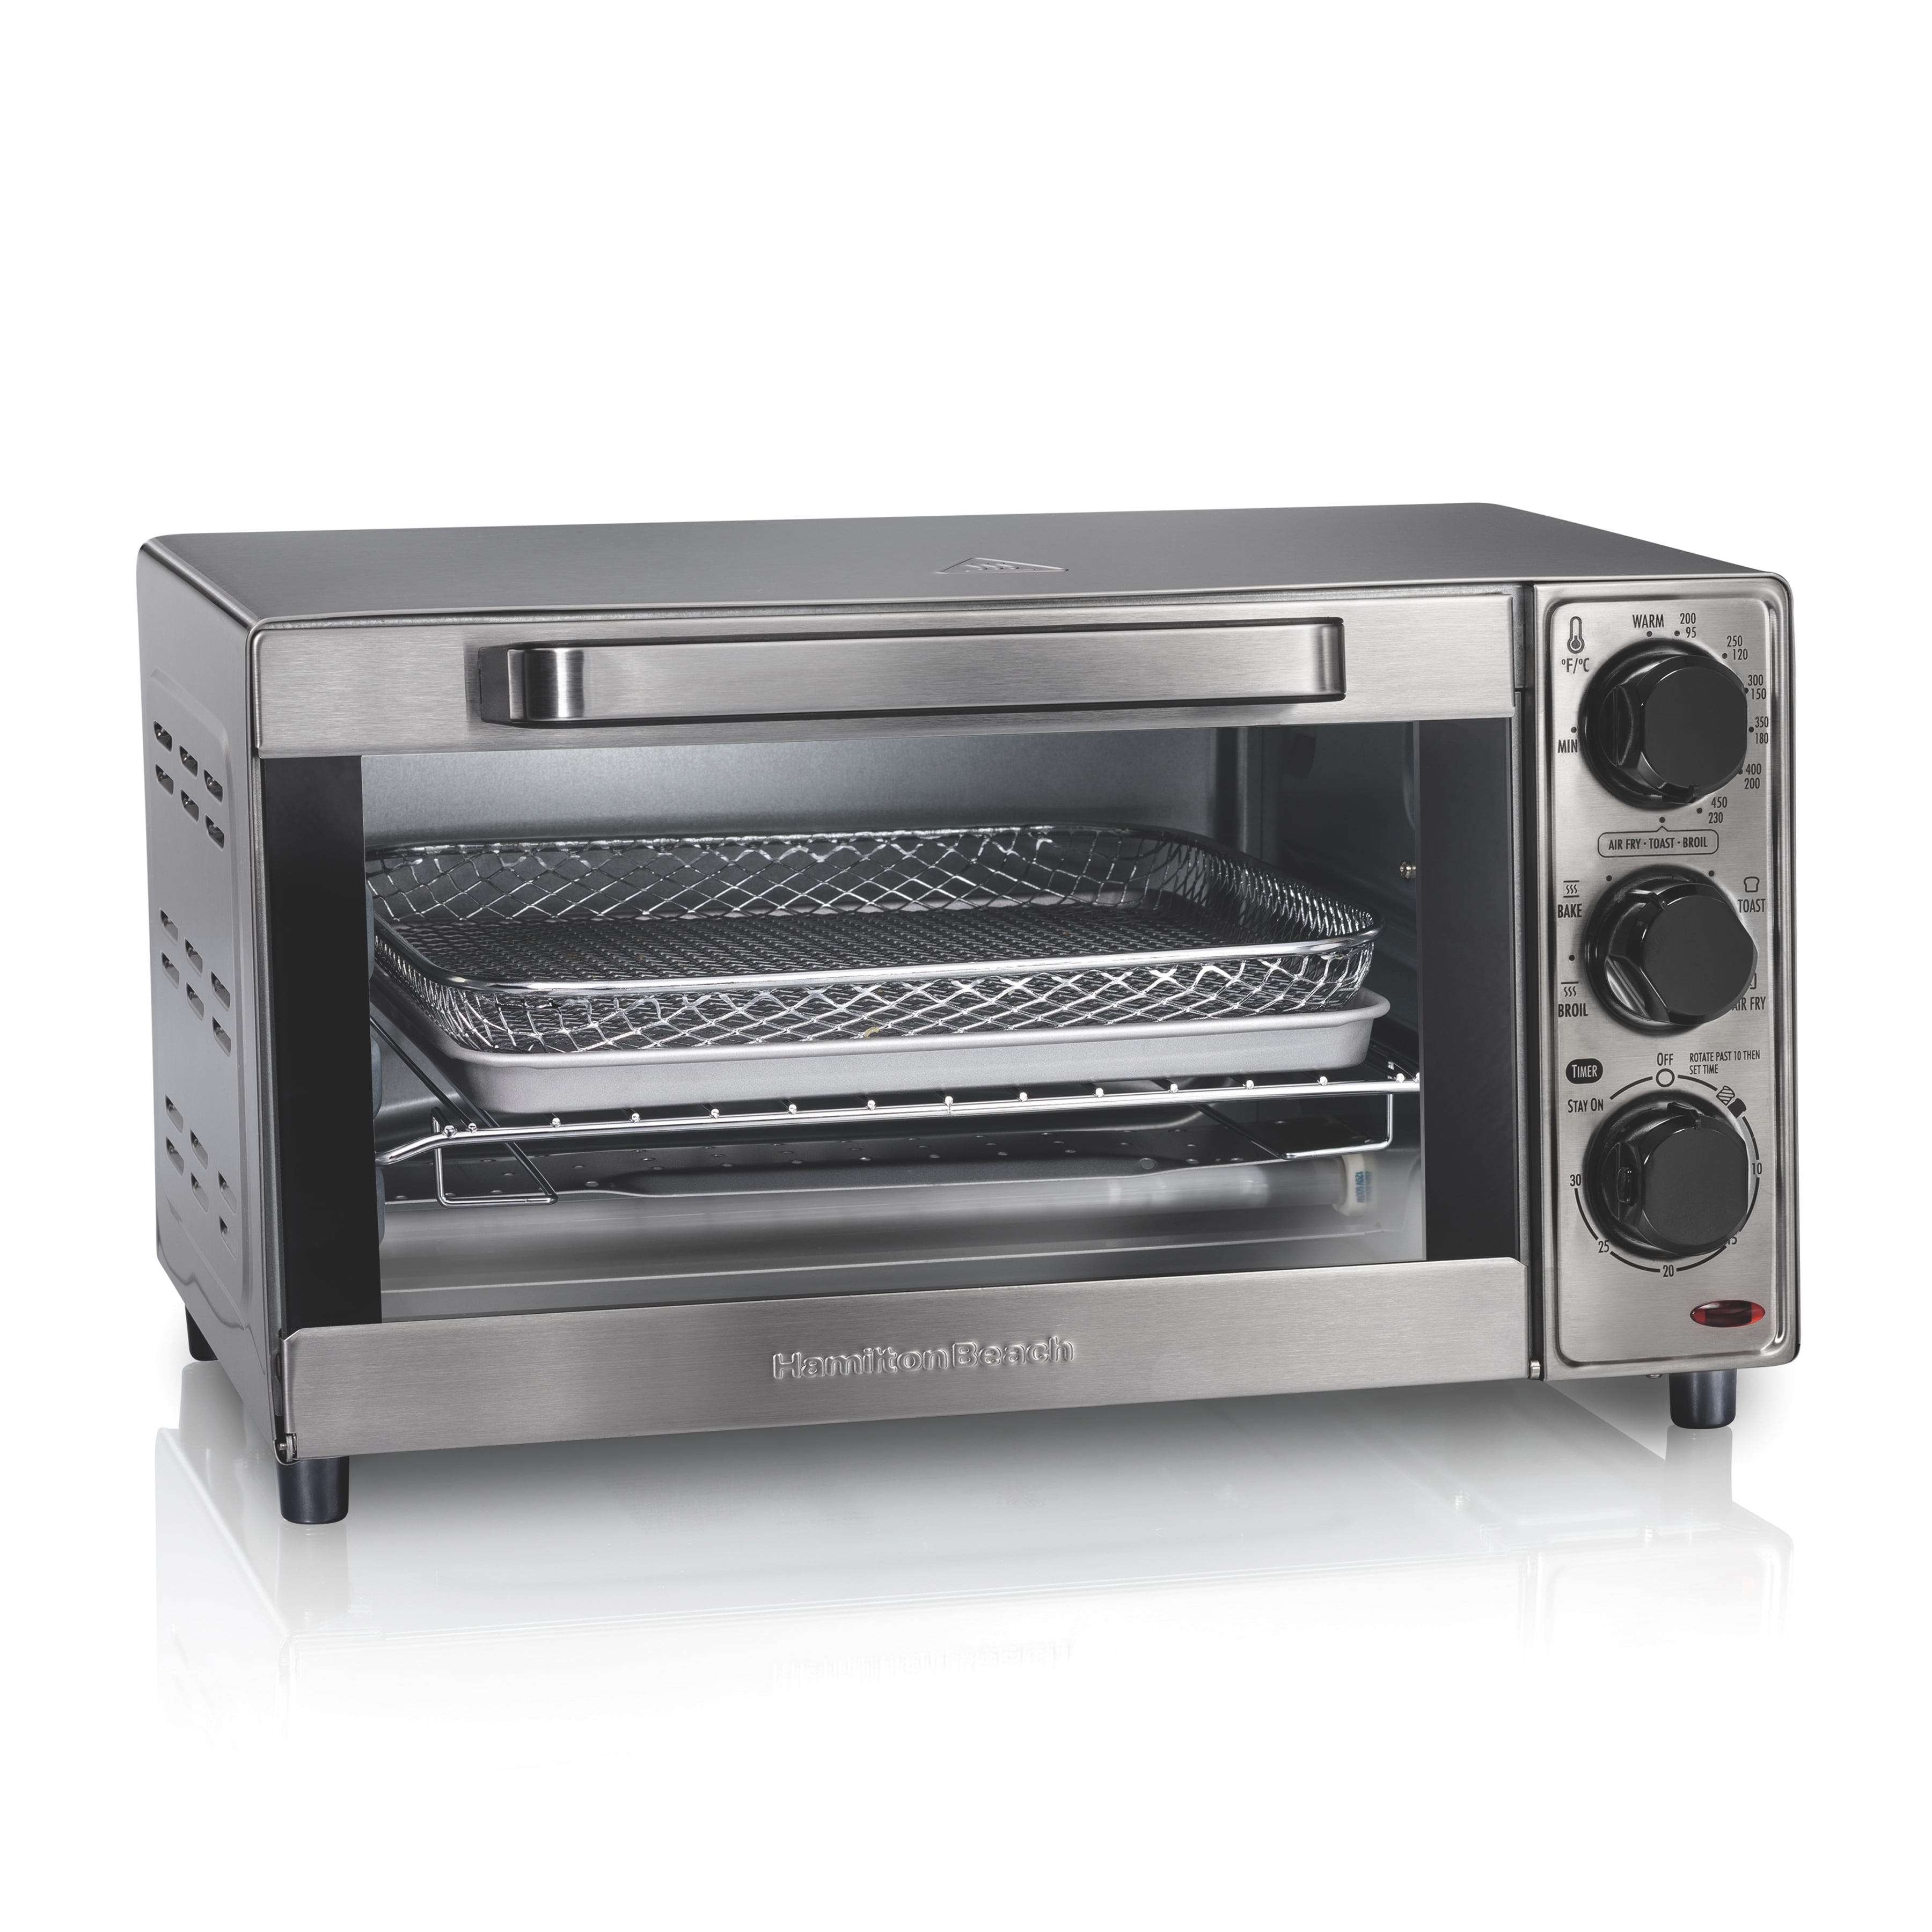 Hamilton Beach Sure-Crisp Air Fryer Toaster Oven, 4 Slice Capacity